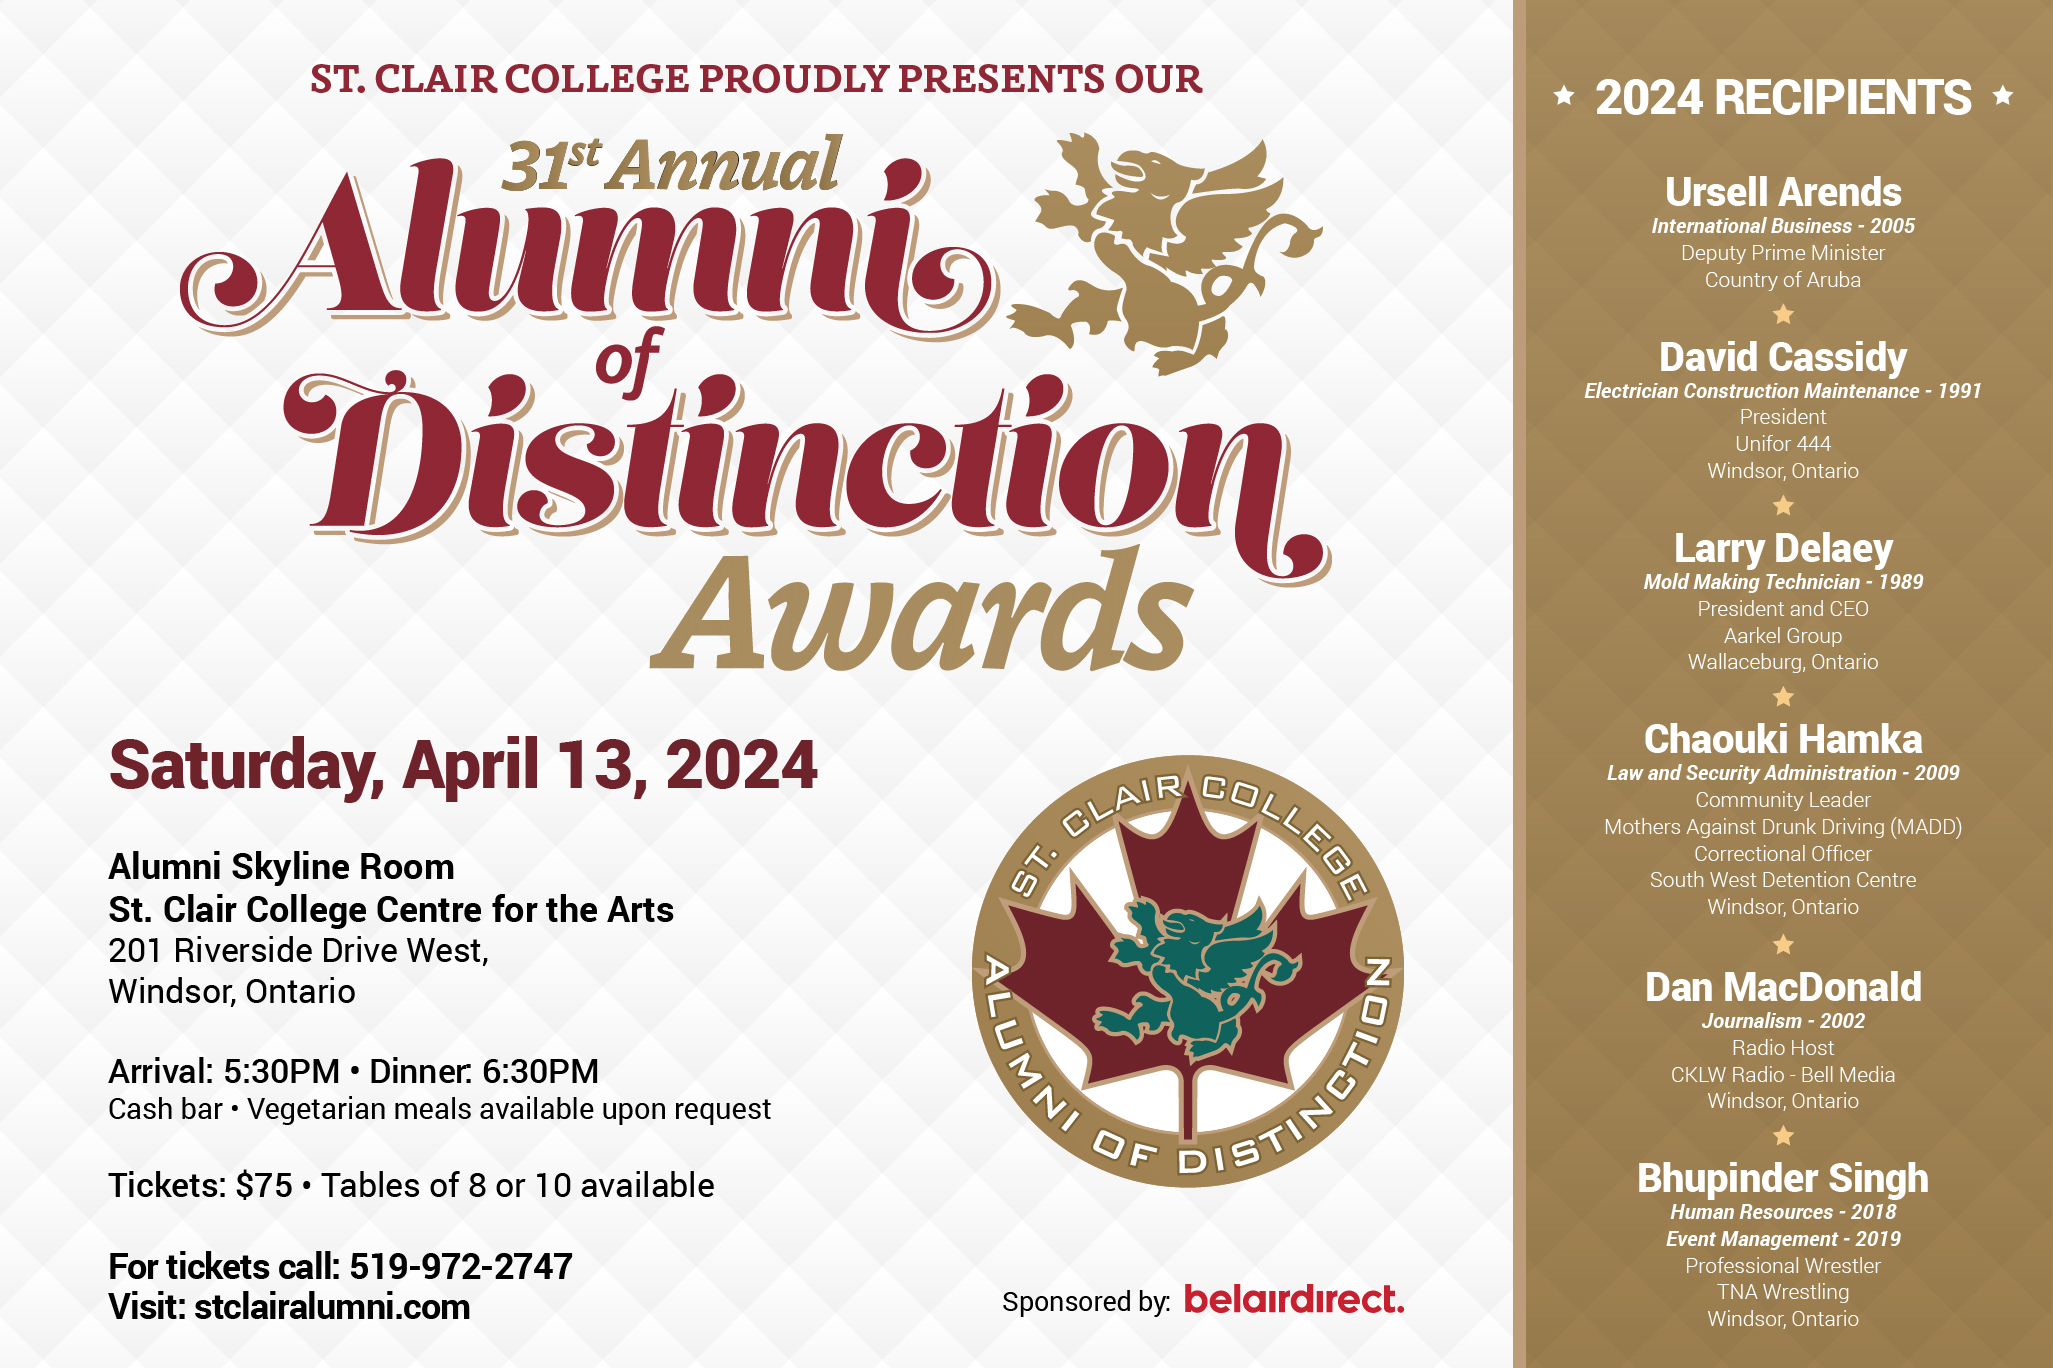 31st Annual Alumni of Distinction Awards Dinner. Saturday, April 13, 2024